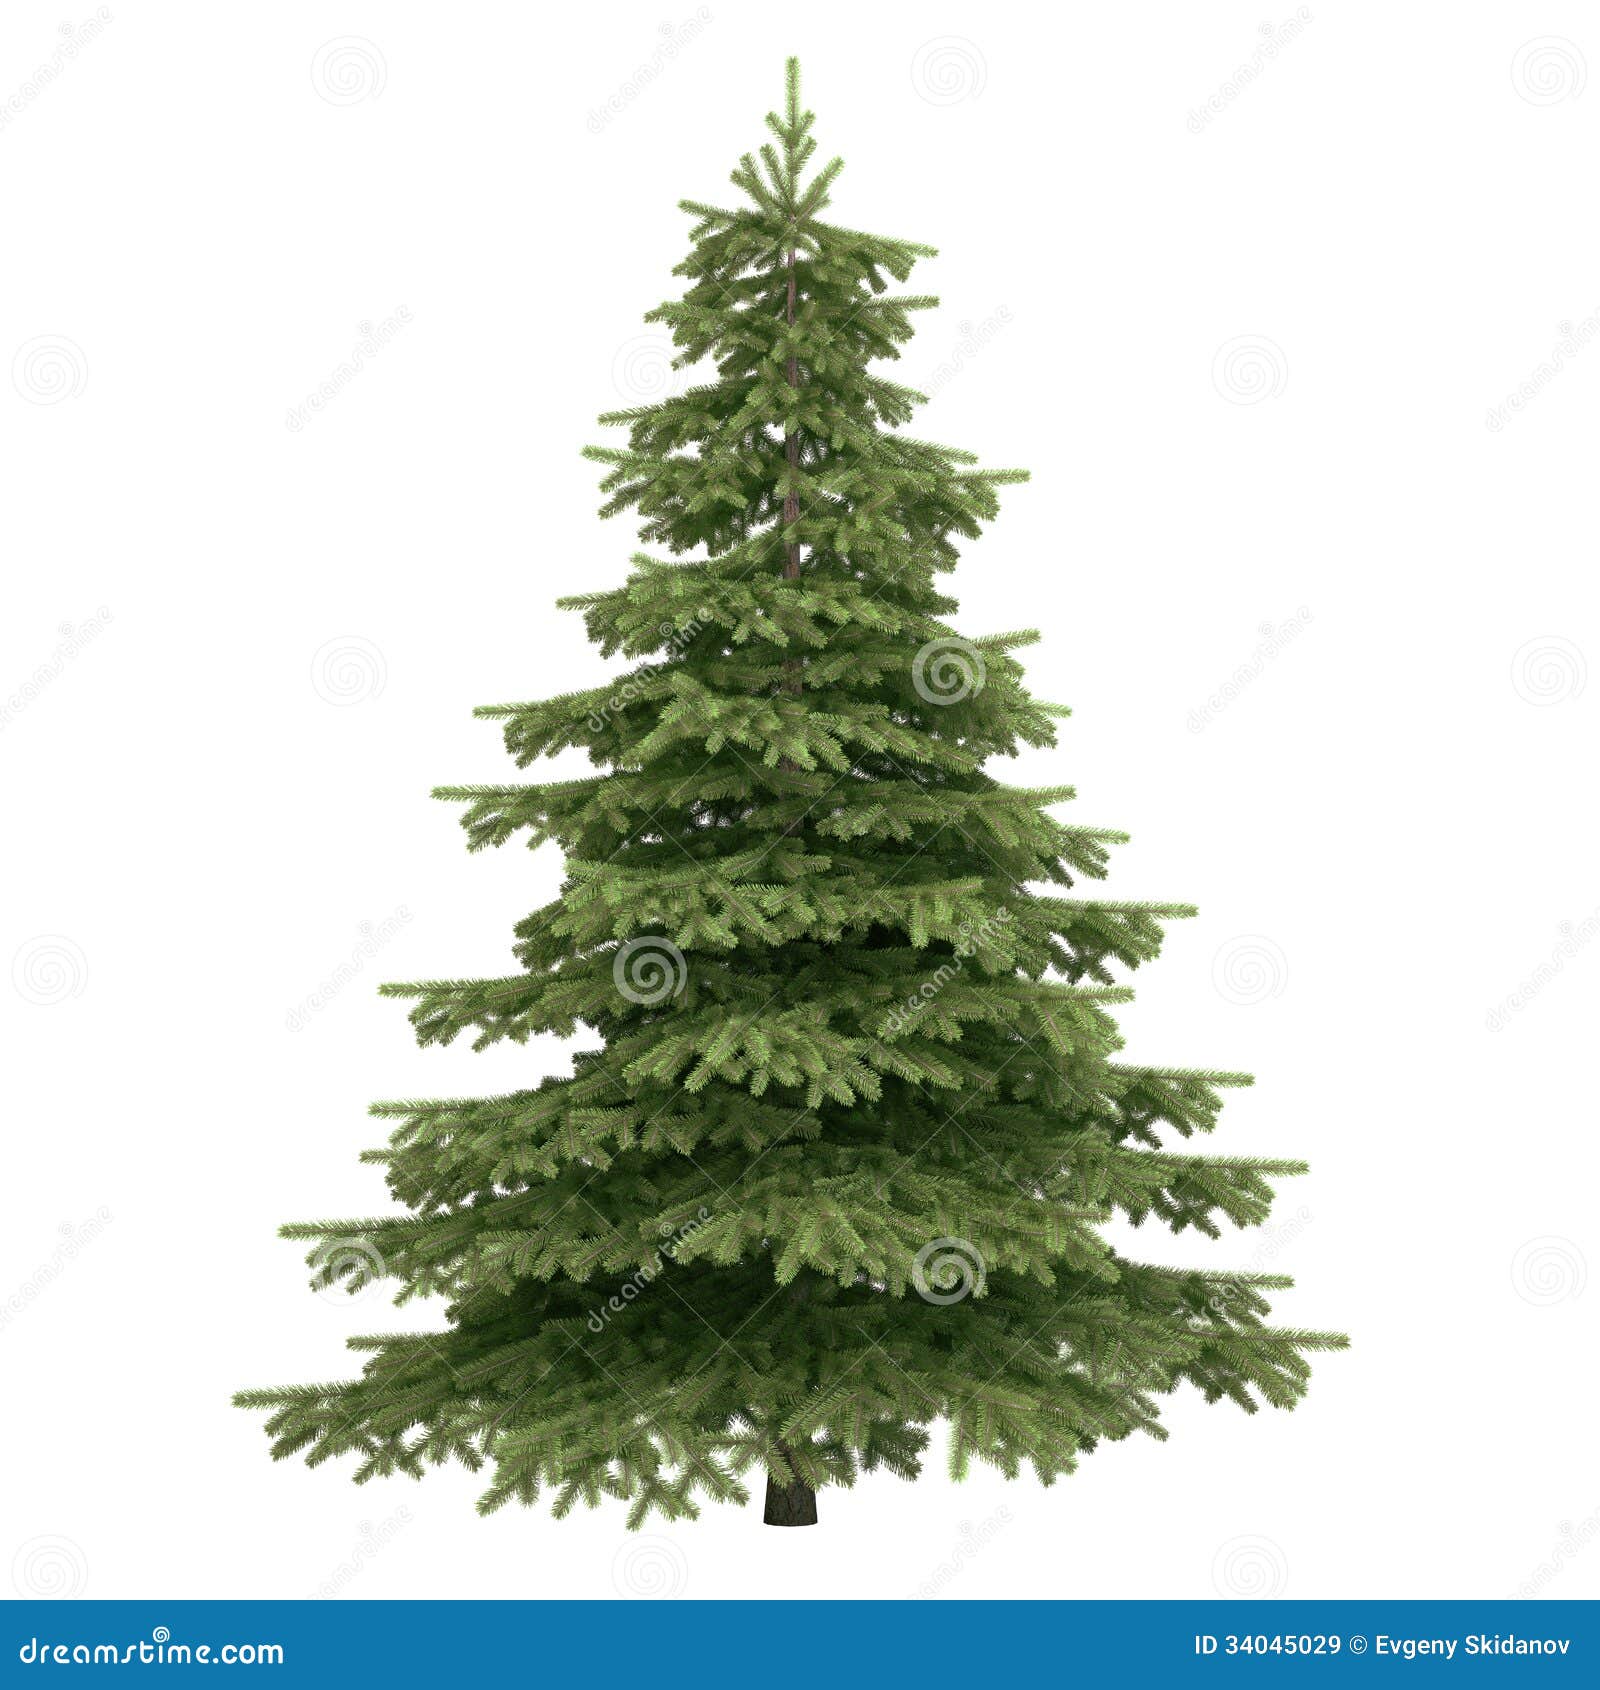 clipart spruce tree - photo #42